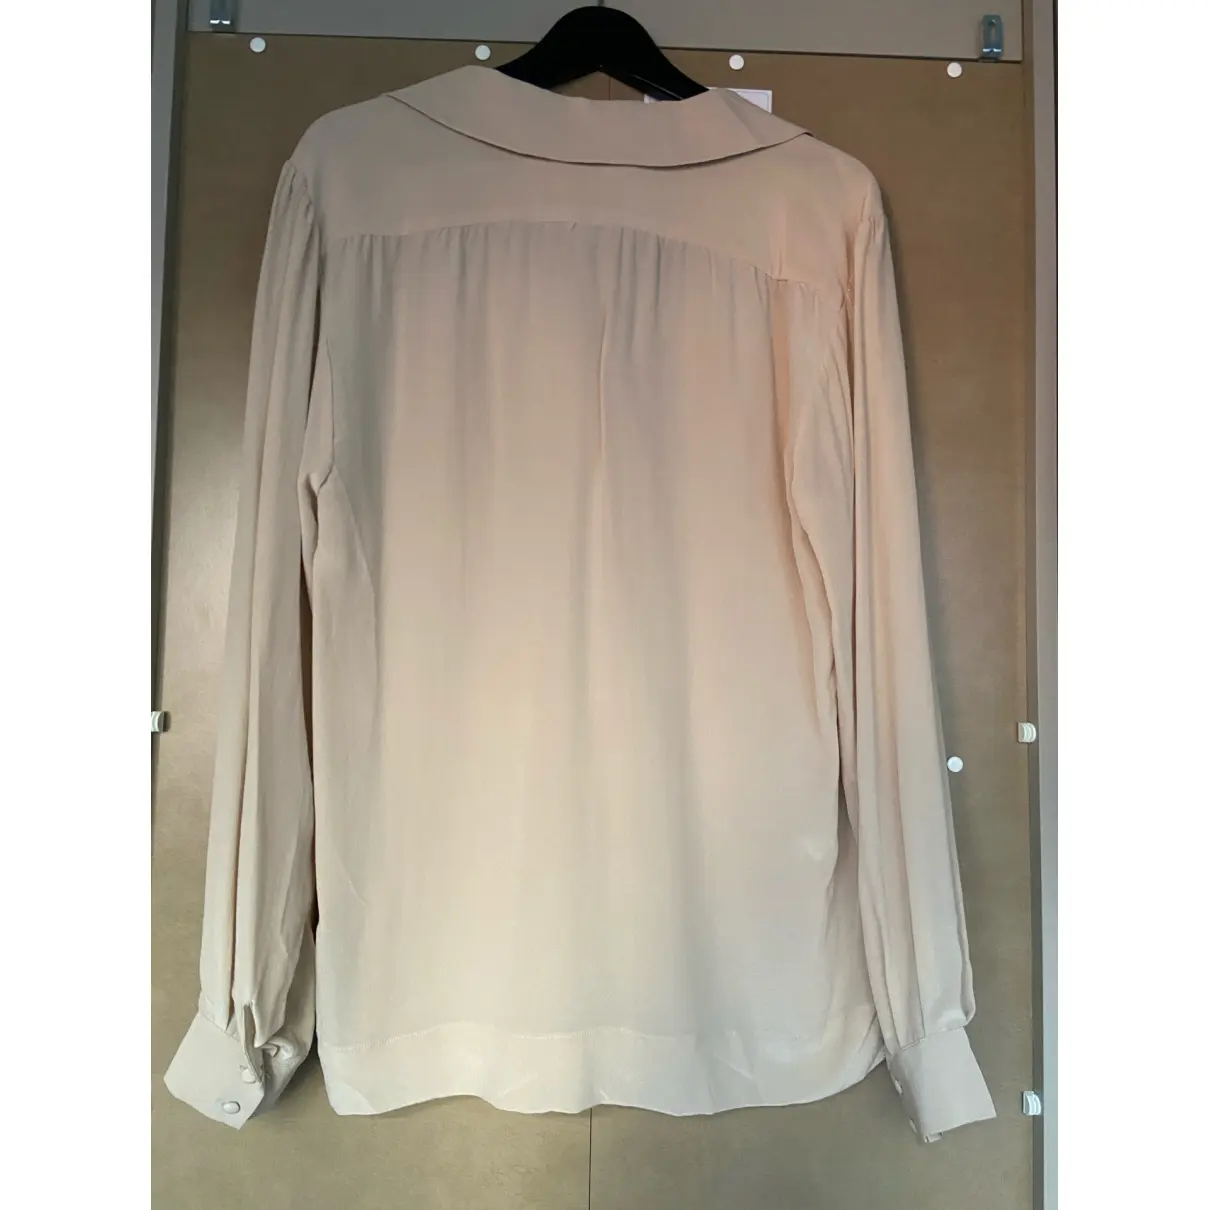 Buy Rachel Zoe Silk blouse online